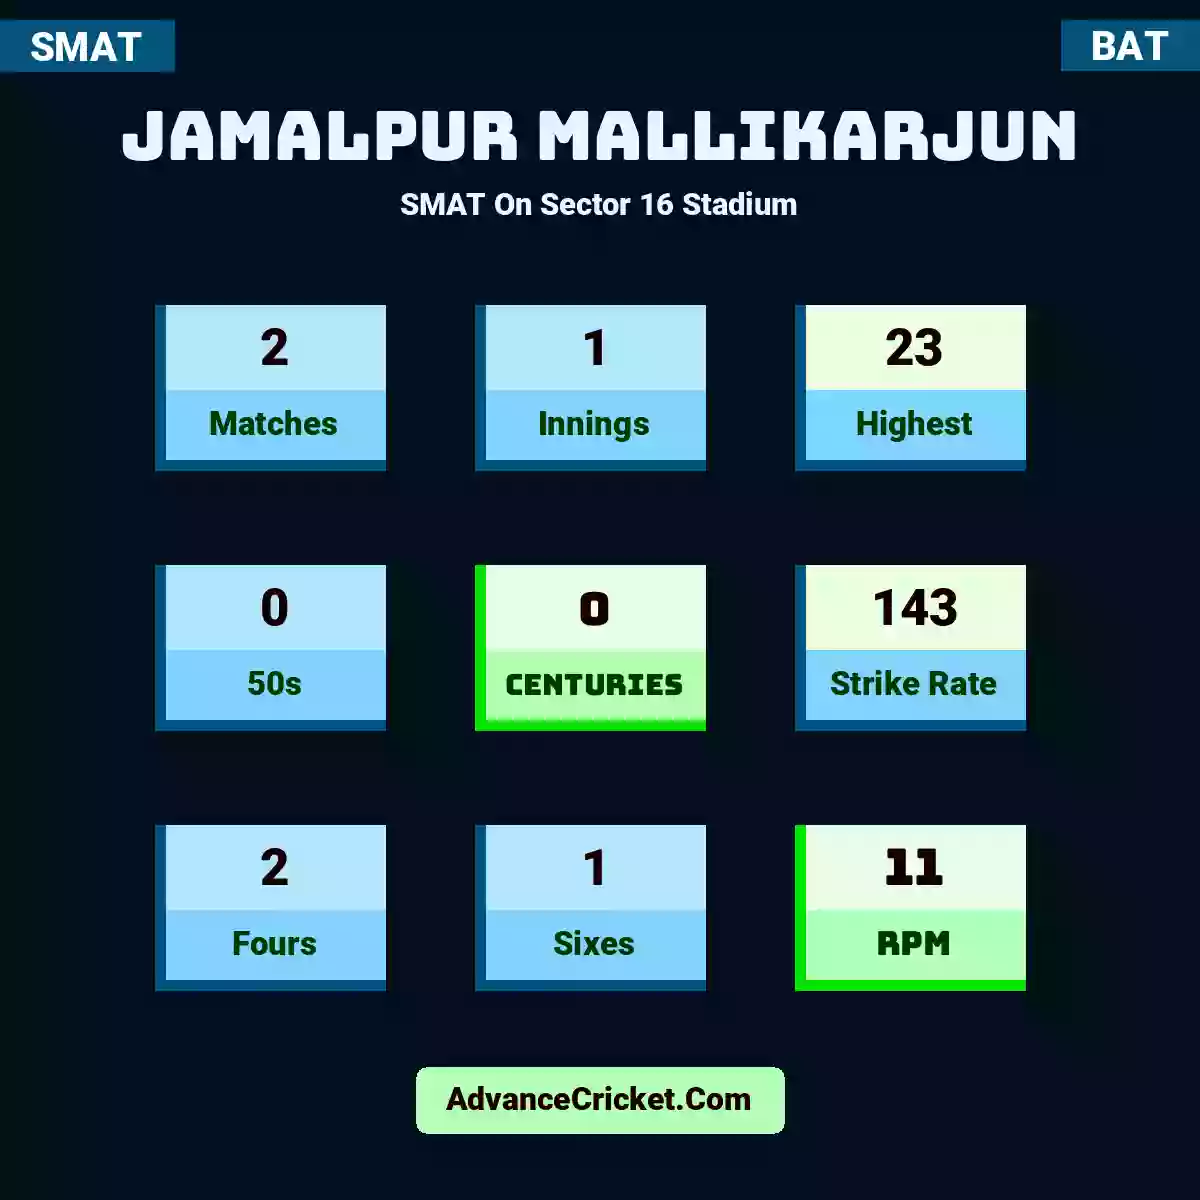 Jamalpur Mallikarjun SMAT  On Sector 16 Stadium, Jamalpur Mallikarjun played 2 matches, scored 23 runs as highest, 0 half-centuries, and 0 centuries, with a strike rate of 143. J.Mallikarjun hit 2 fours and 1 sixes, with an RPM of 11.